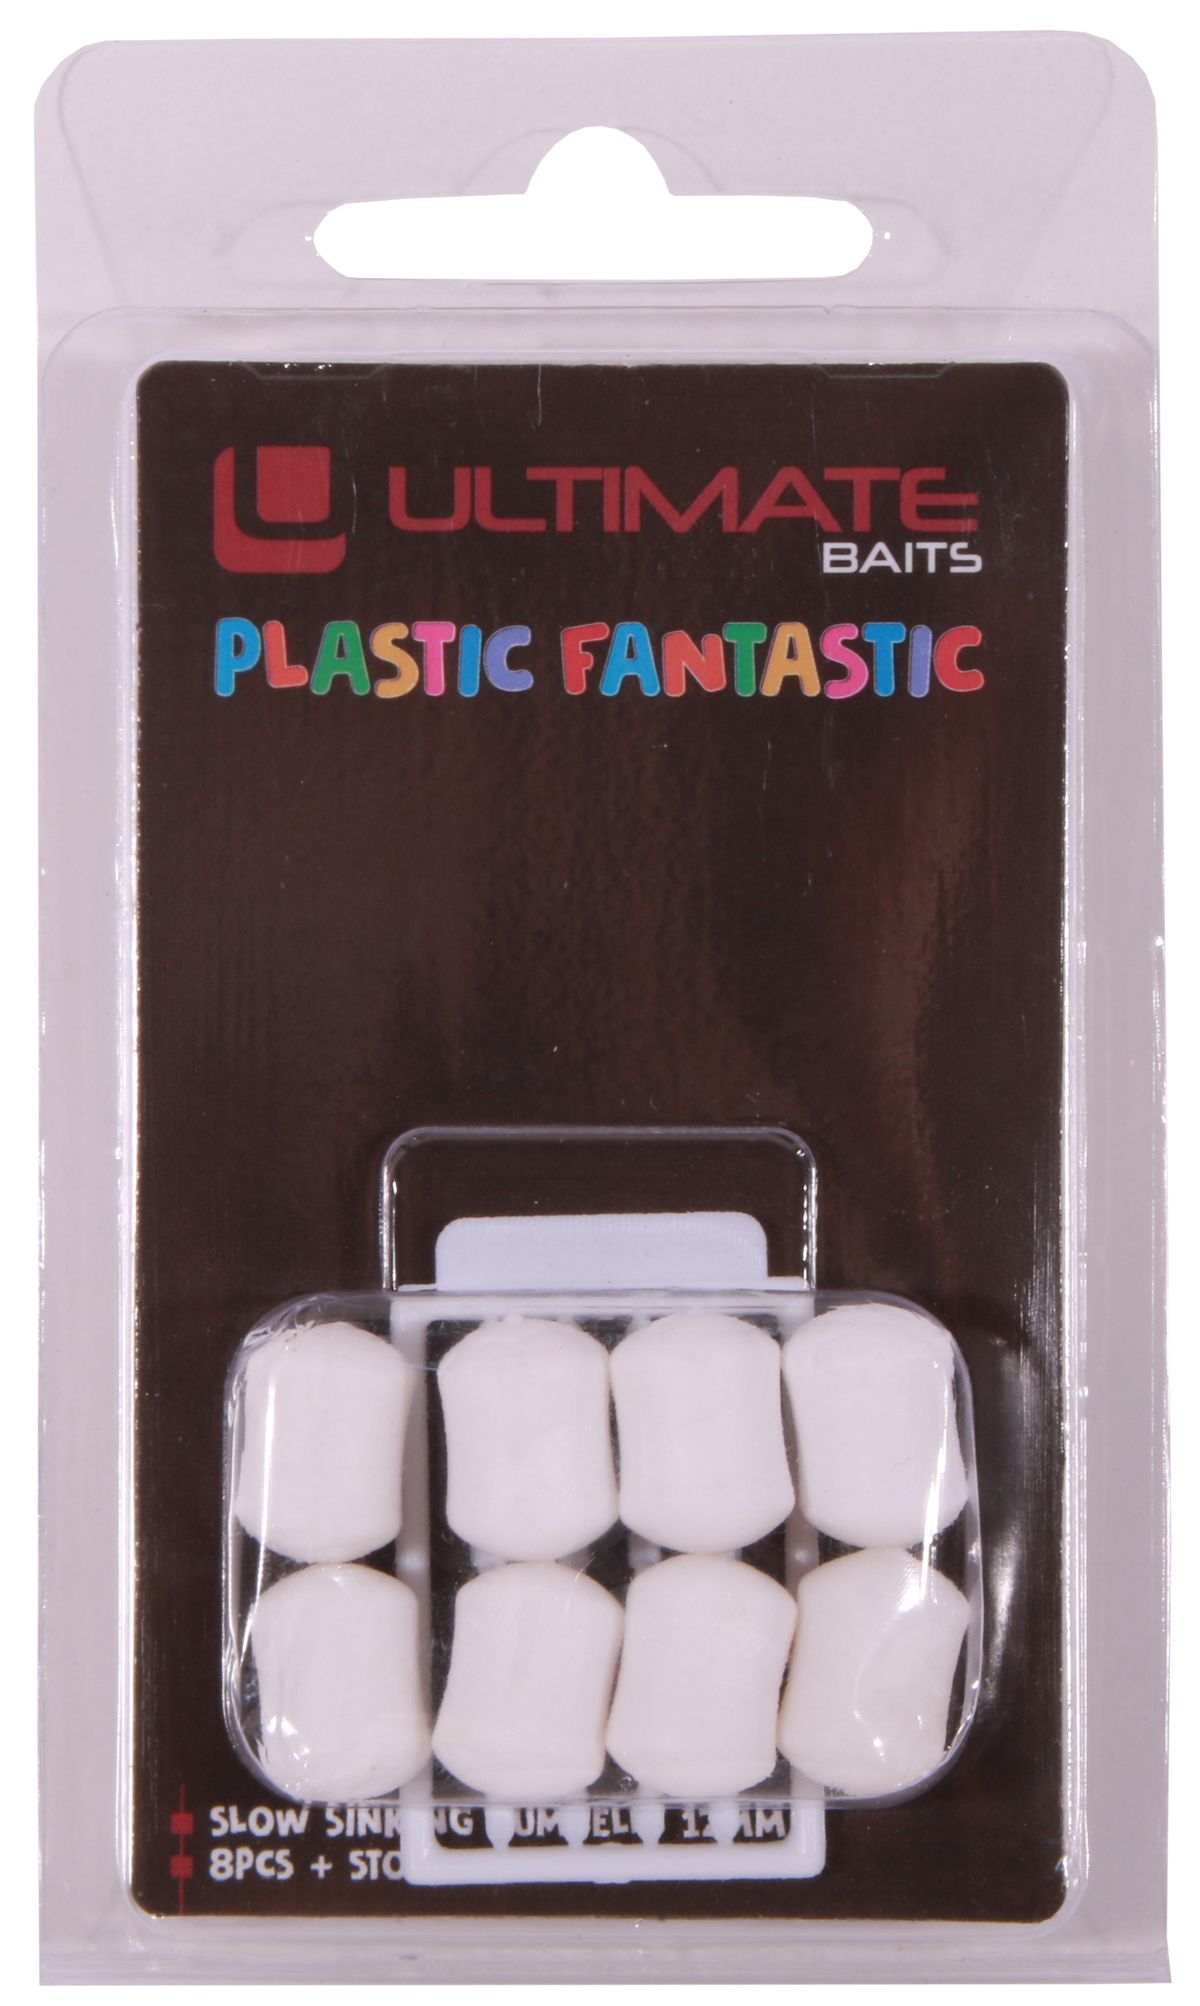 Ultimate Plastic Fantastic Dumbells 12mm